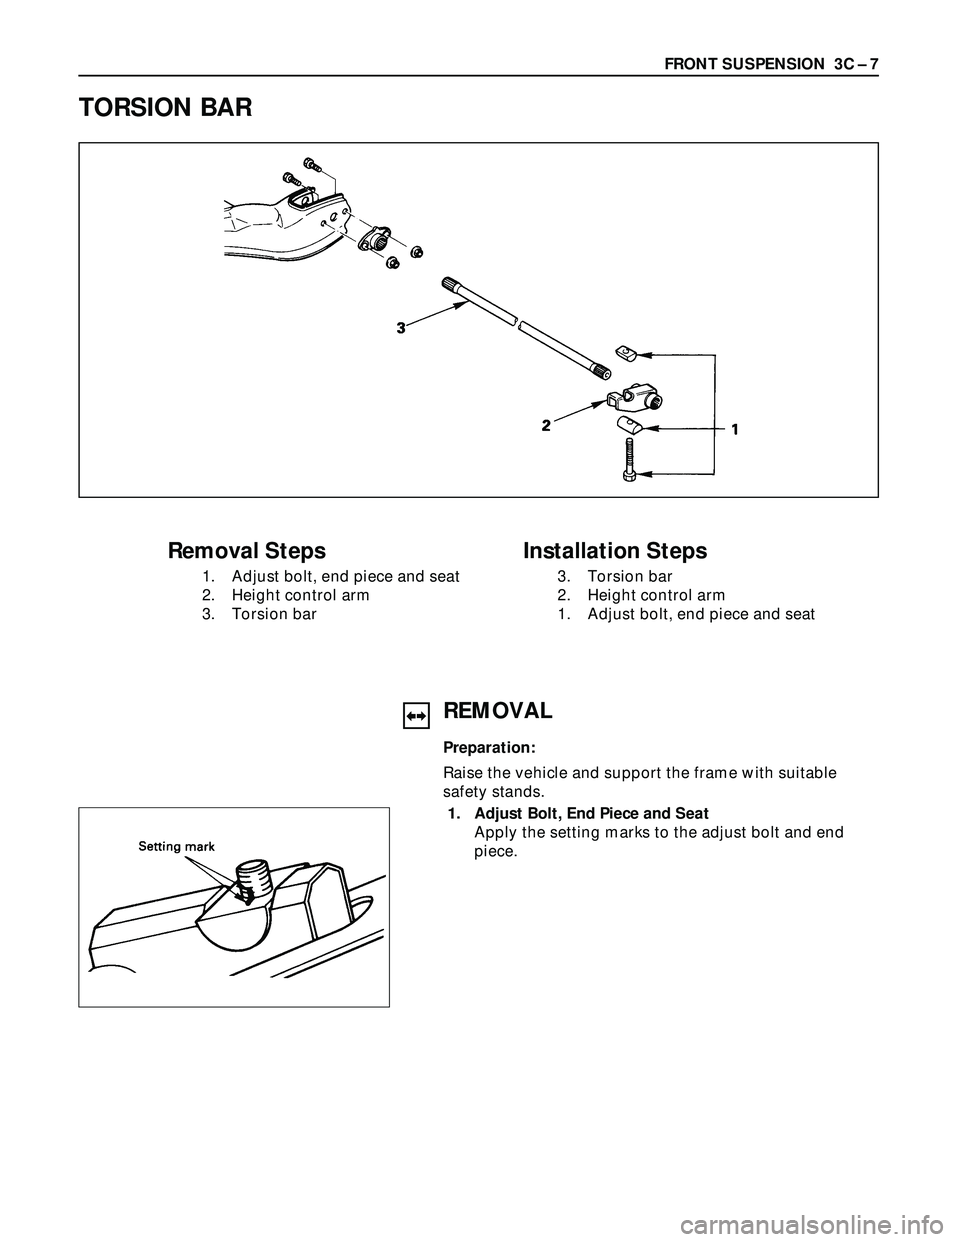 ISUZU TROOPER 1998  Service Repair Manual FRONT SUSPENSION  3C – 7
TORSION BAR
Removal Steps
1. Adjust bolt, end piece and seat
2. Height control arm
3. Torsion bar
Installation Steps
3. Torsion bar
2. Height control arm
1. Adjust bolt, end